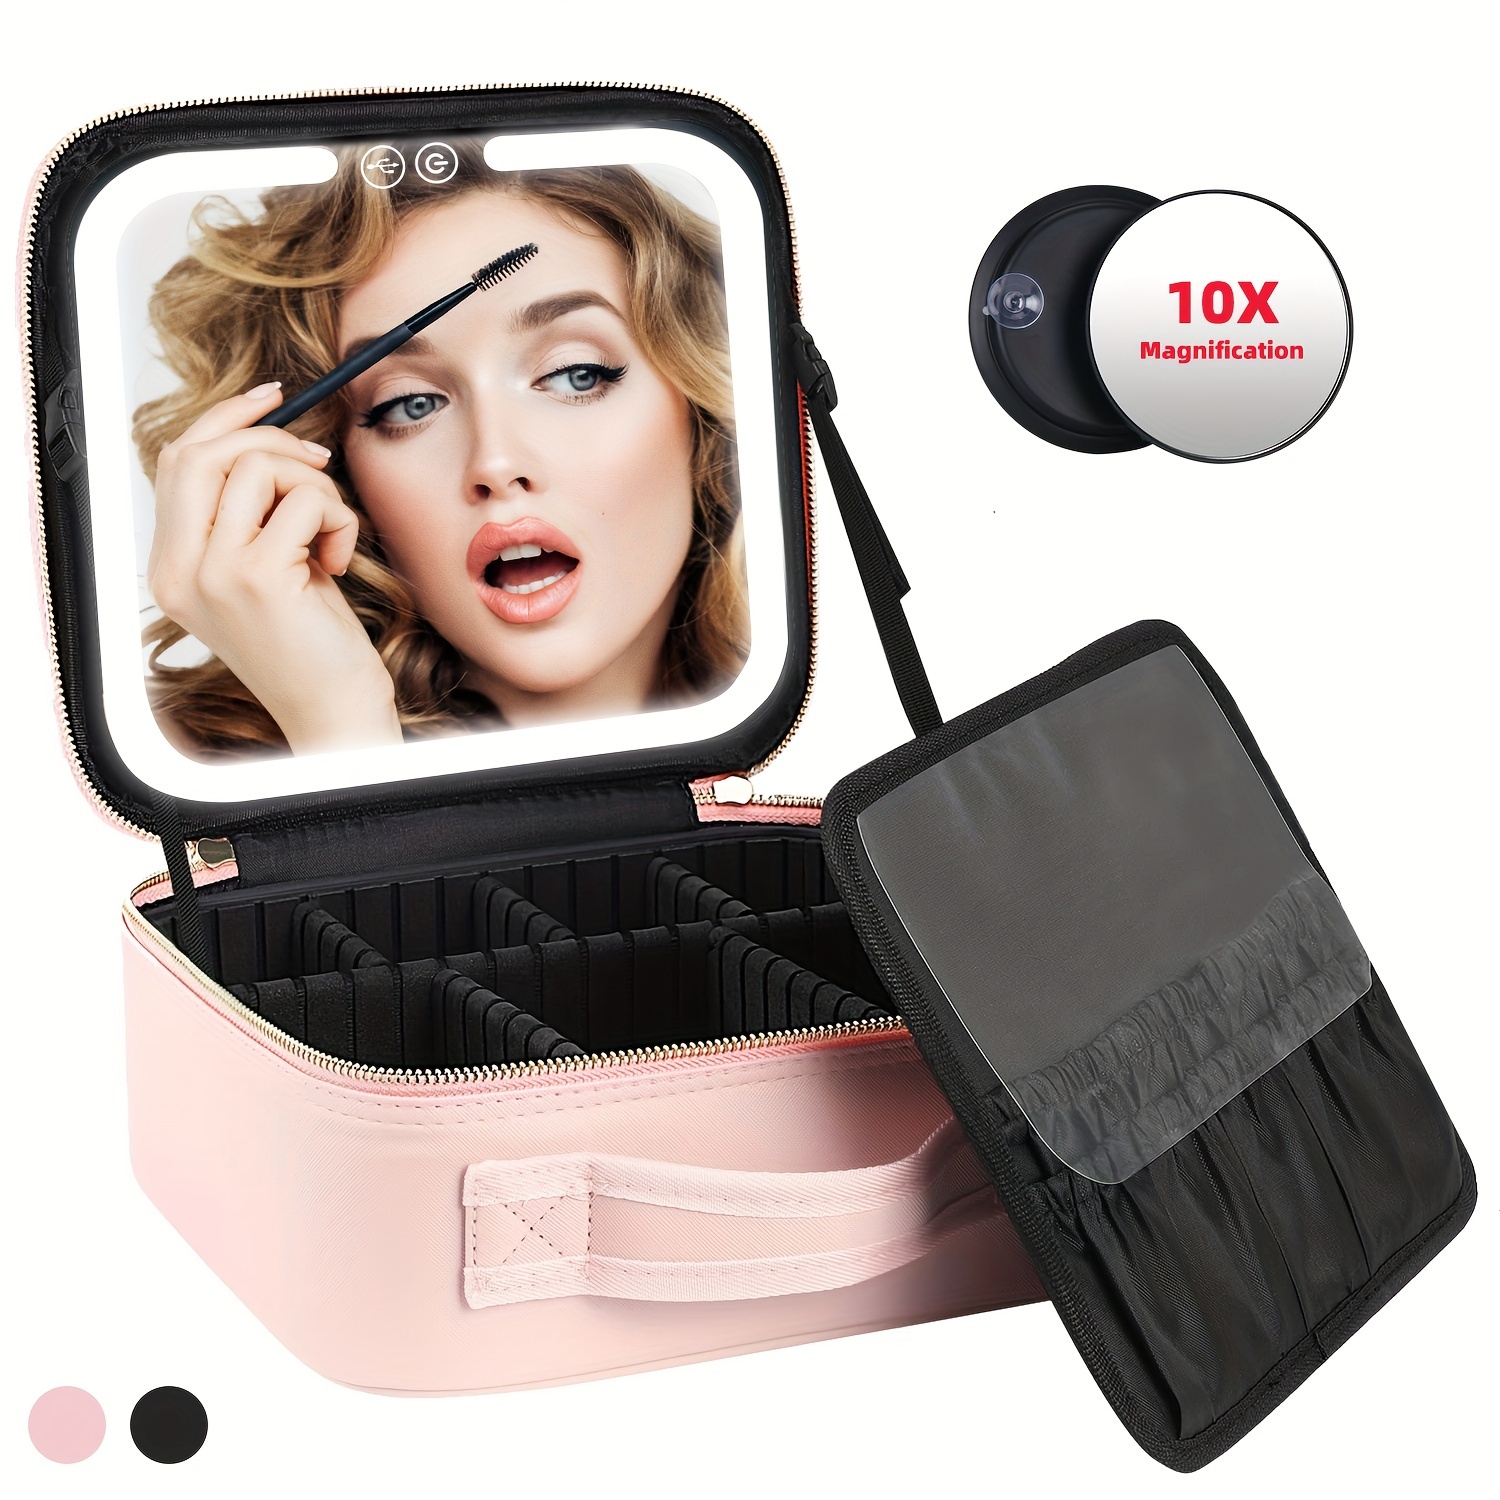 

Travel Makeup Bag Cosmetic Bag Makeup Organizer Bag With Lighted Mirror 3 Color Scenarios Adjustable Brightness, Detachable Makeup Train Case, Gift For Women